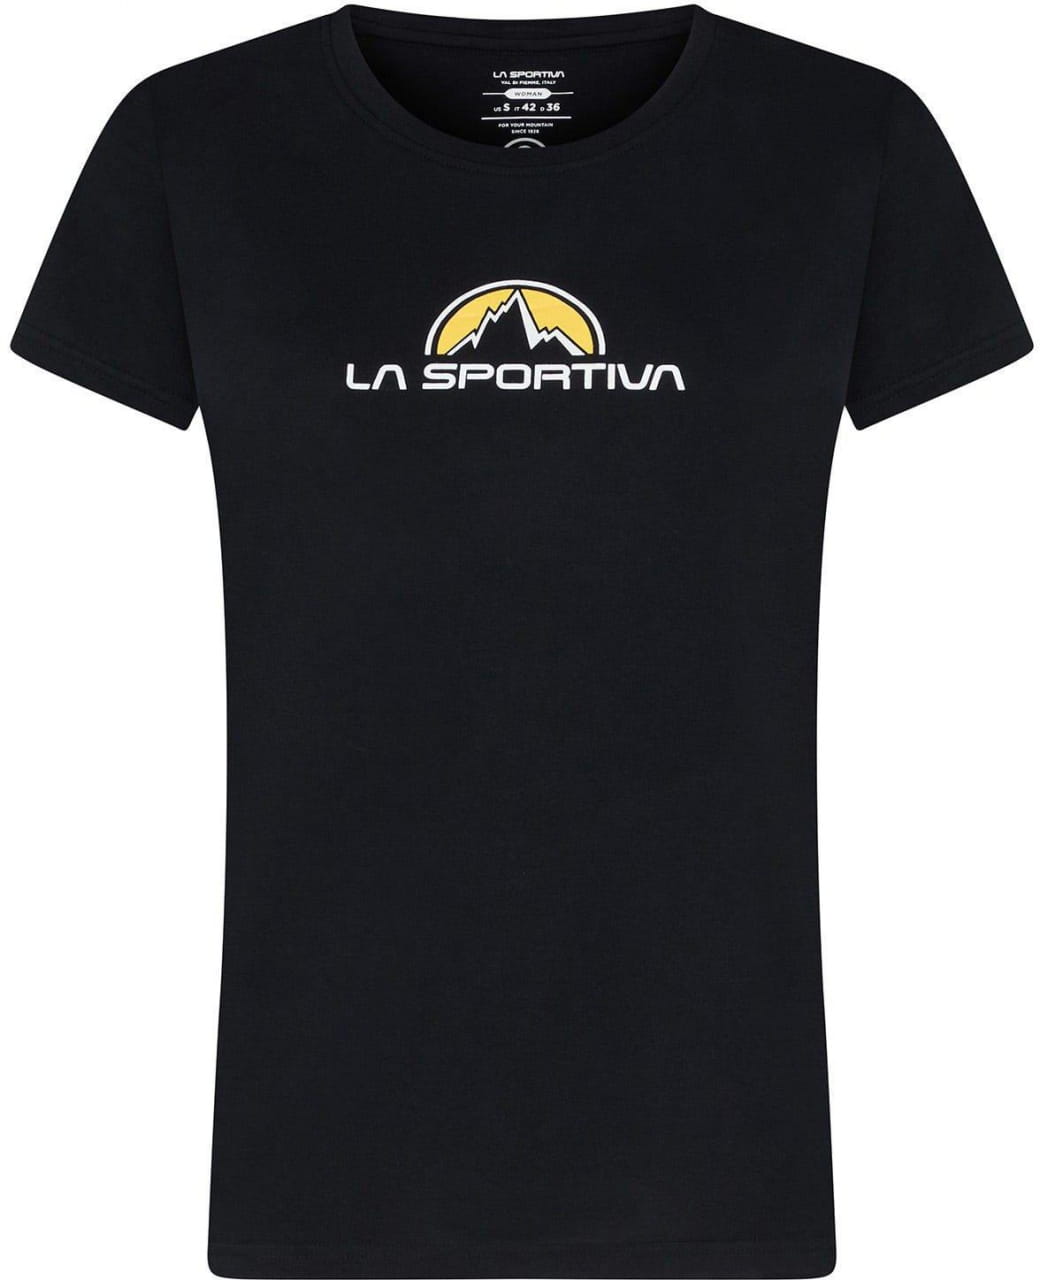 Damska koszulka sportowa La Sportiva Brand Tee W